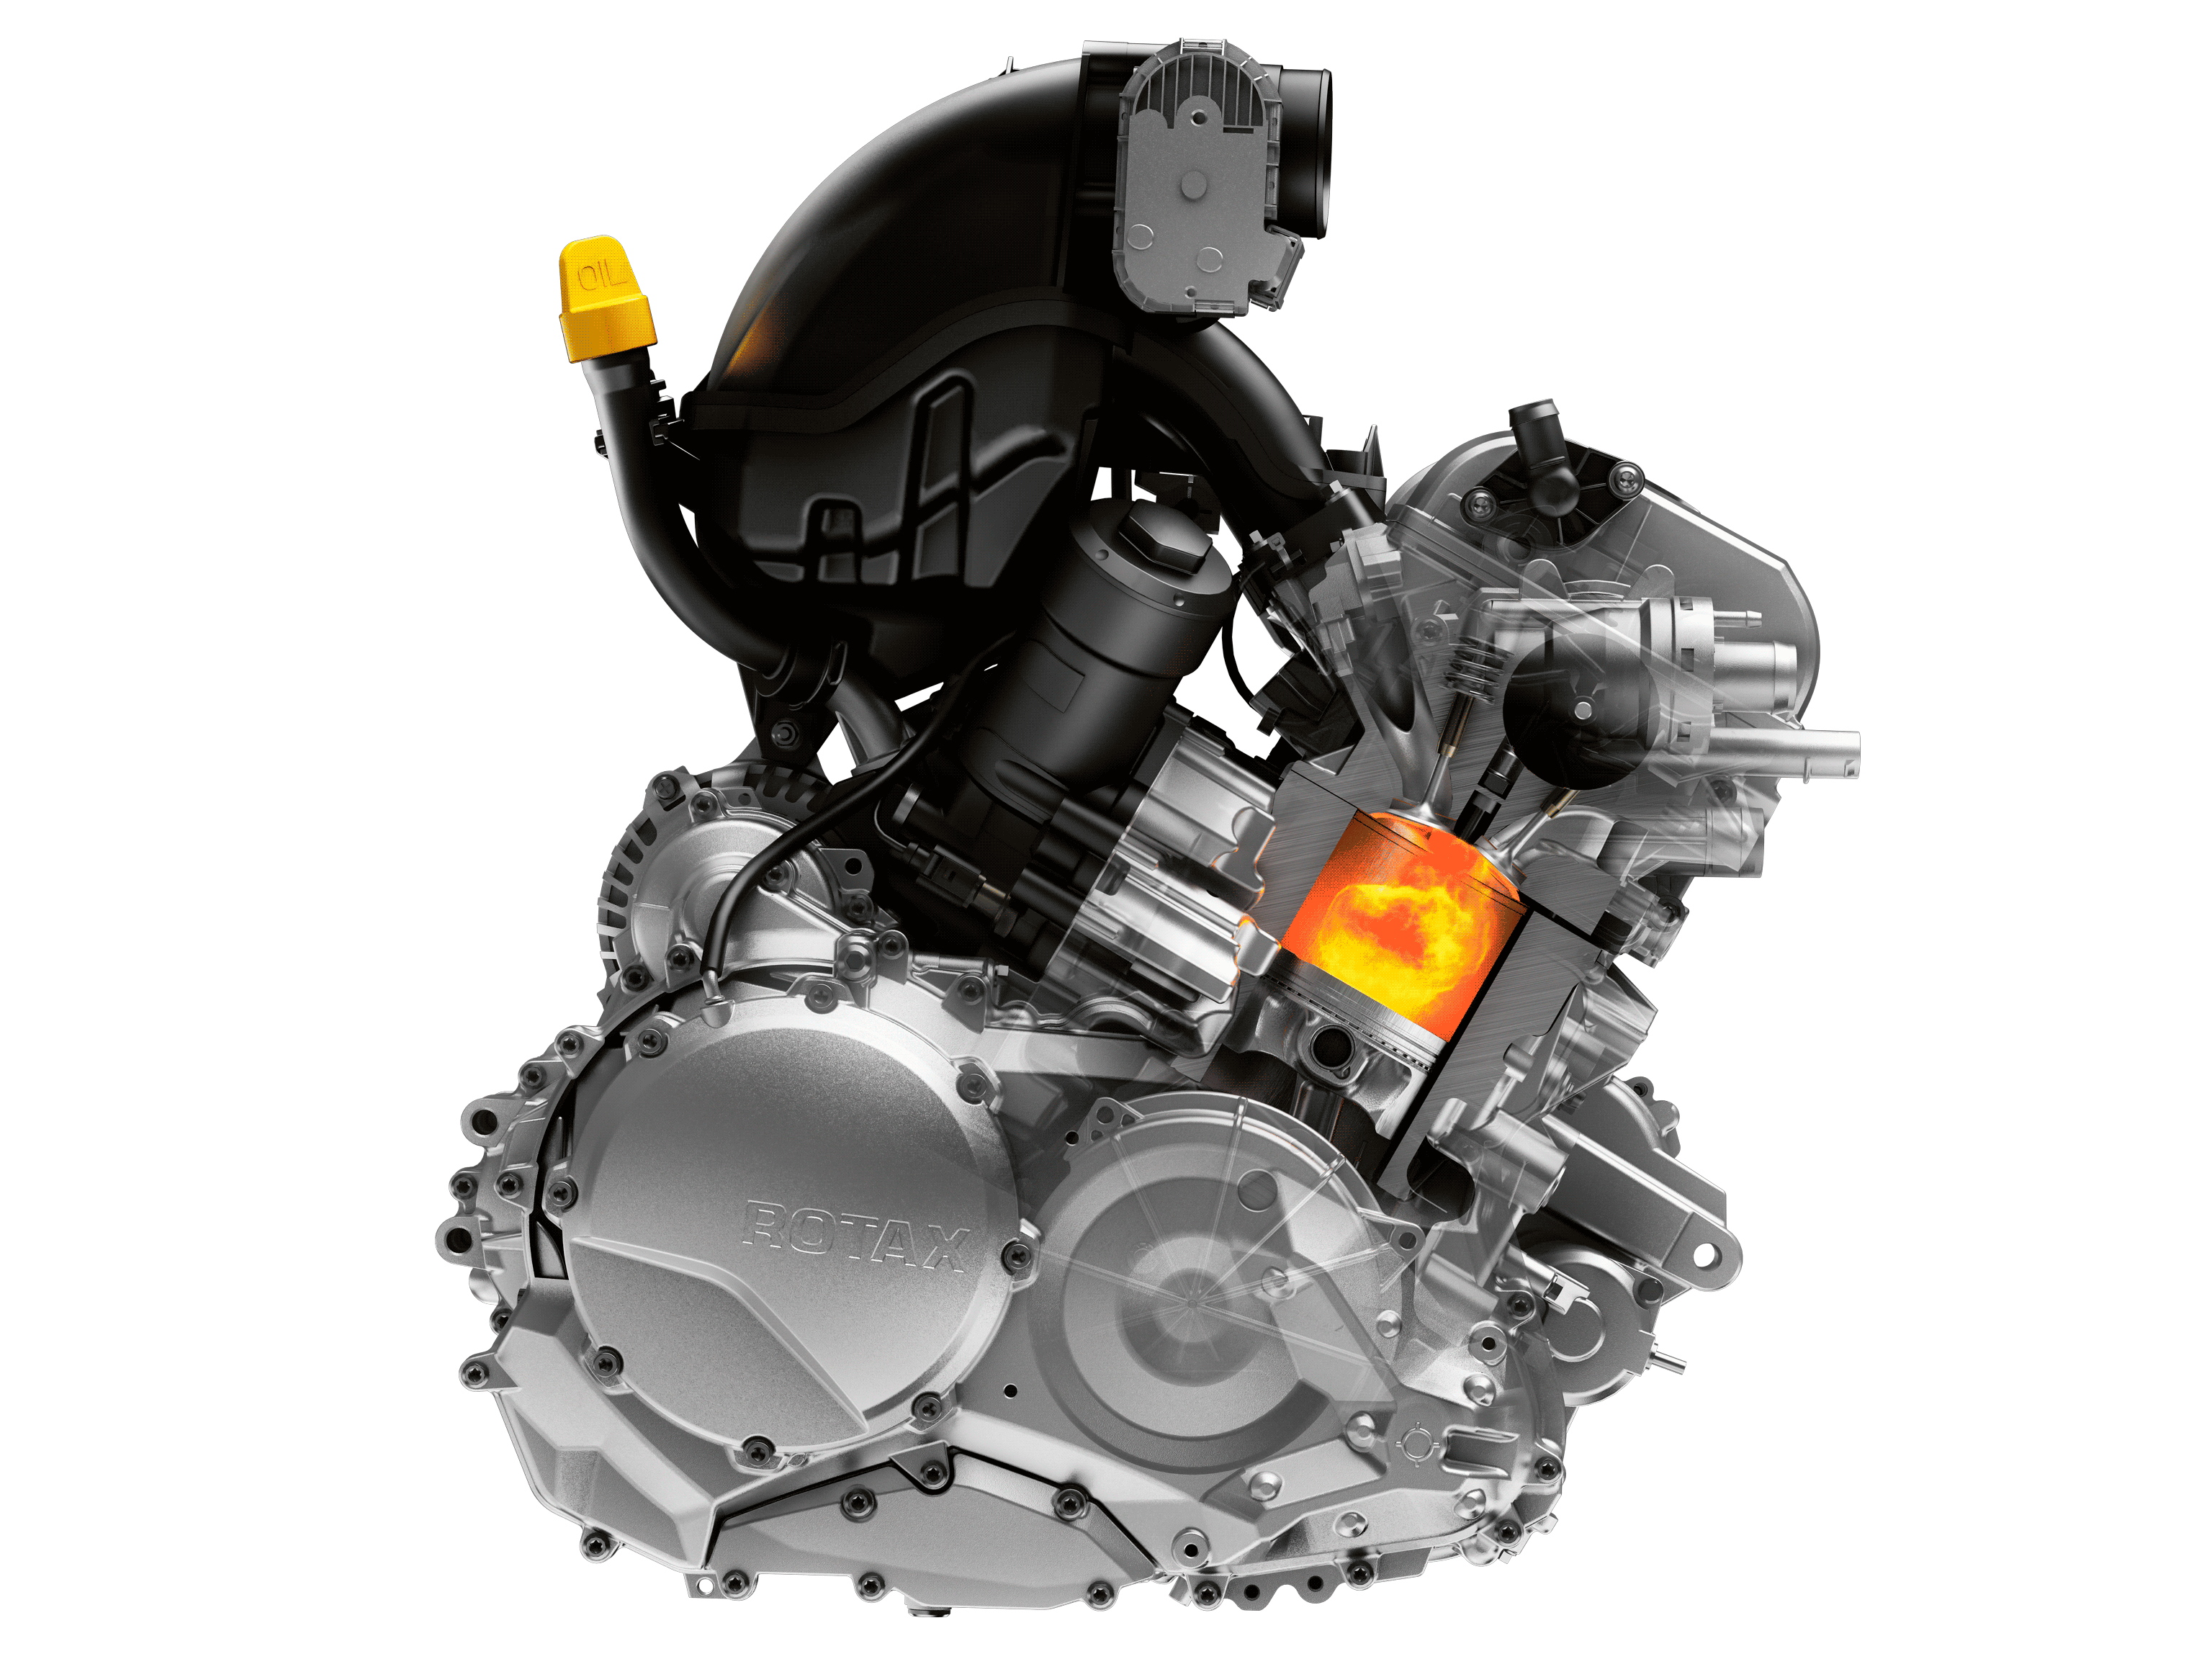 Illustration of Rotax Engine